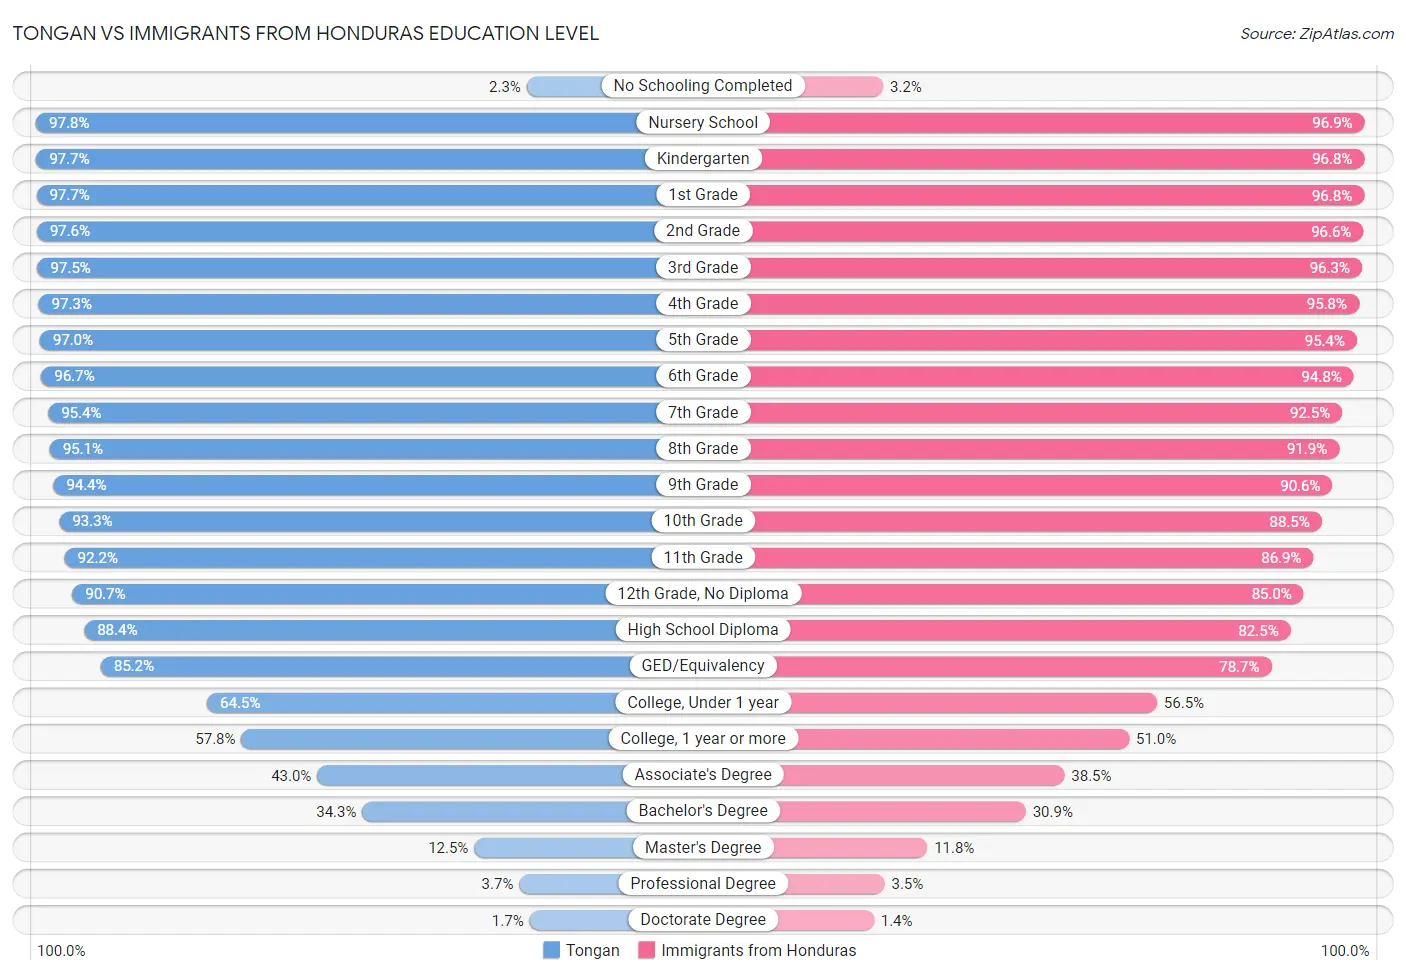 Tongan vs Immigrants from Honduras Education Level